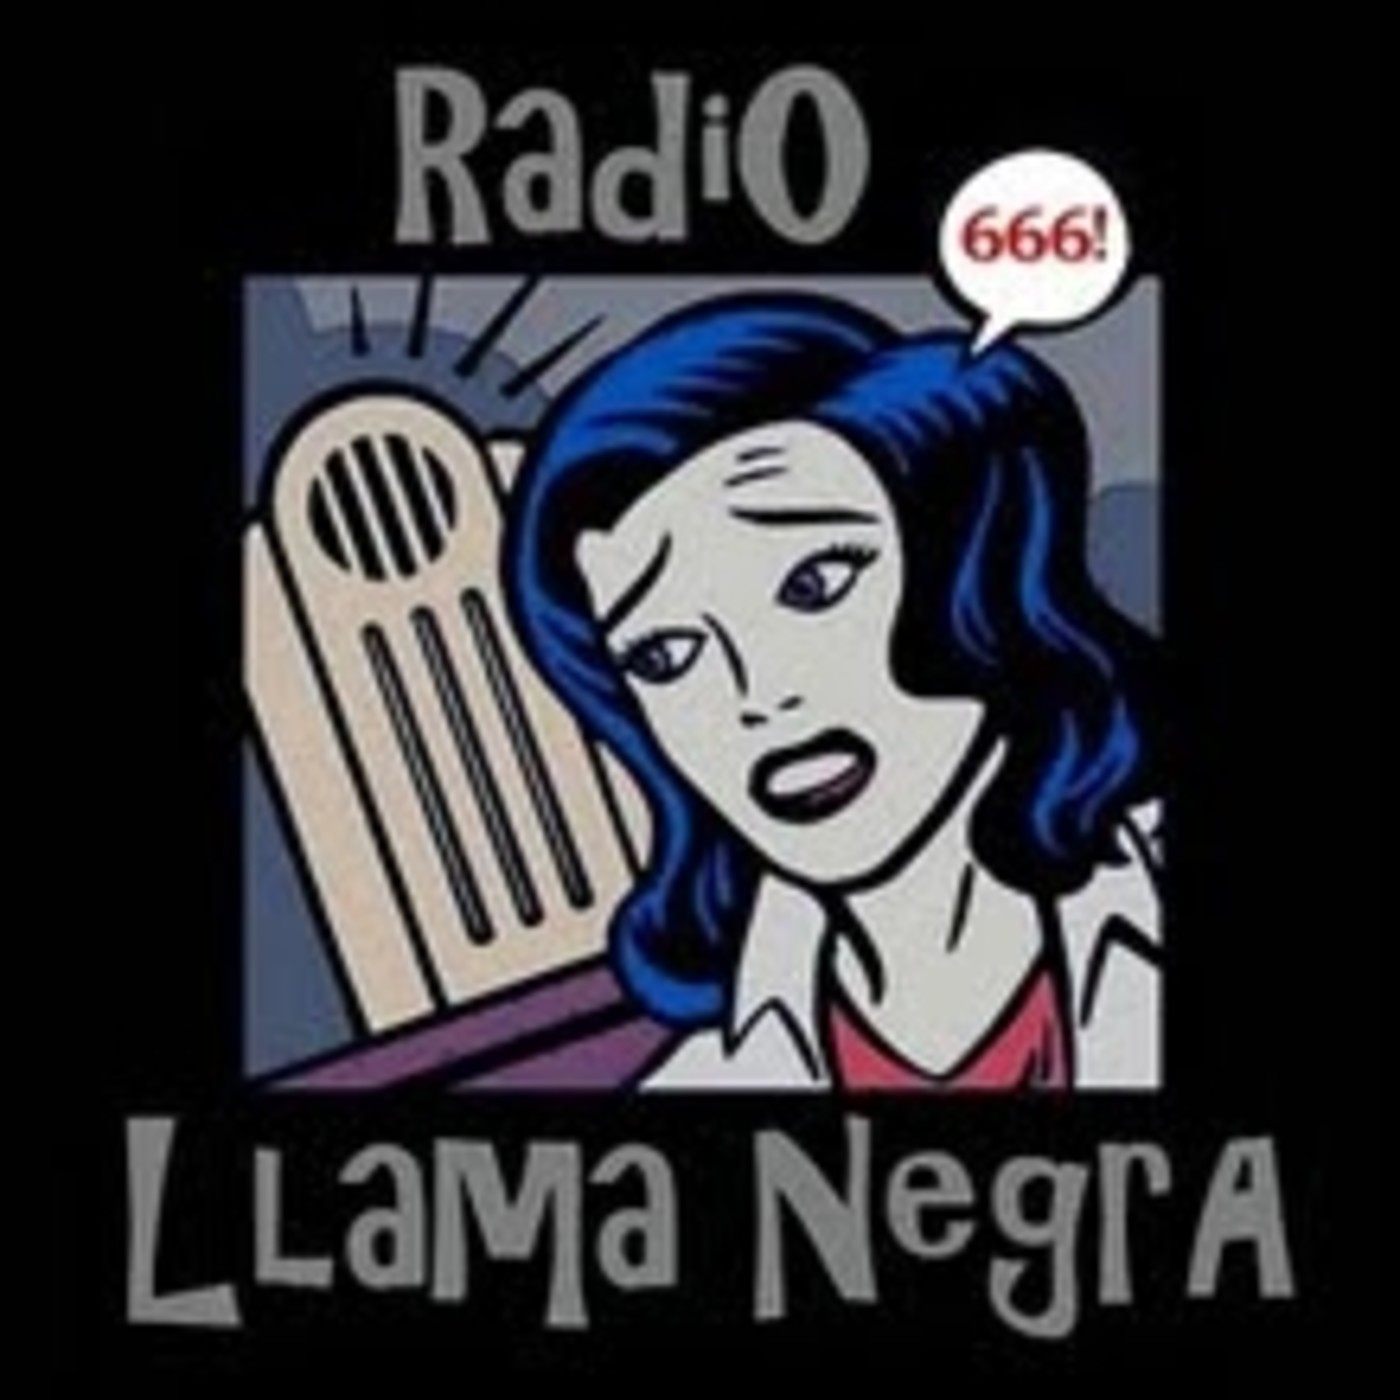 Radio Llama Negra